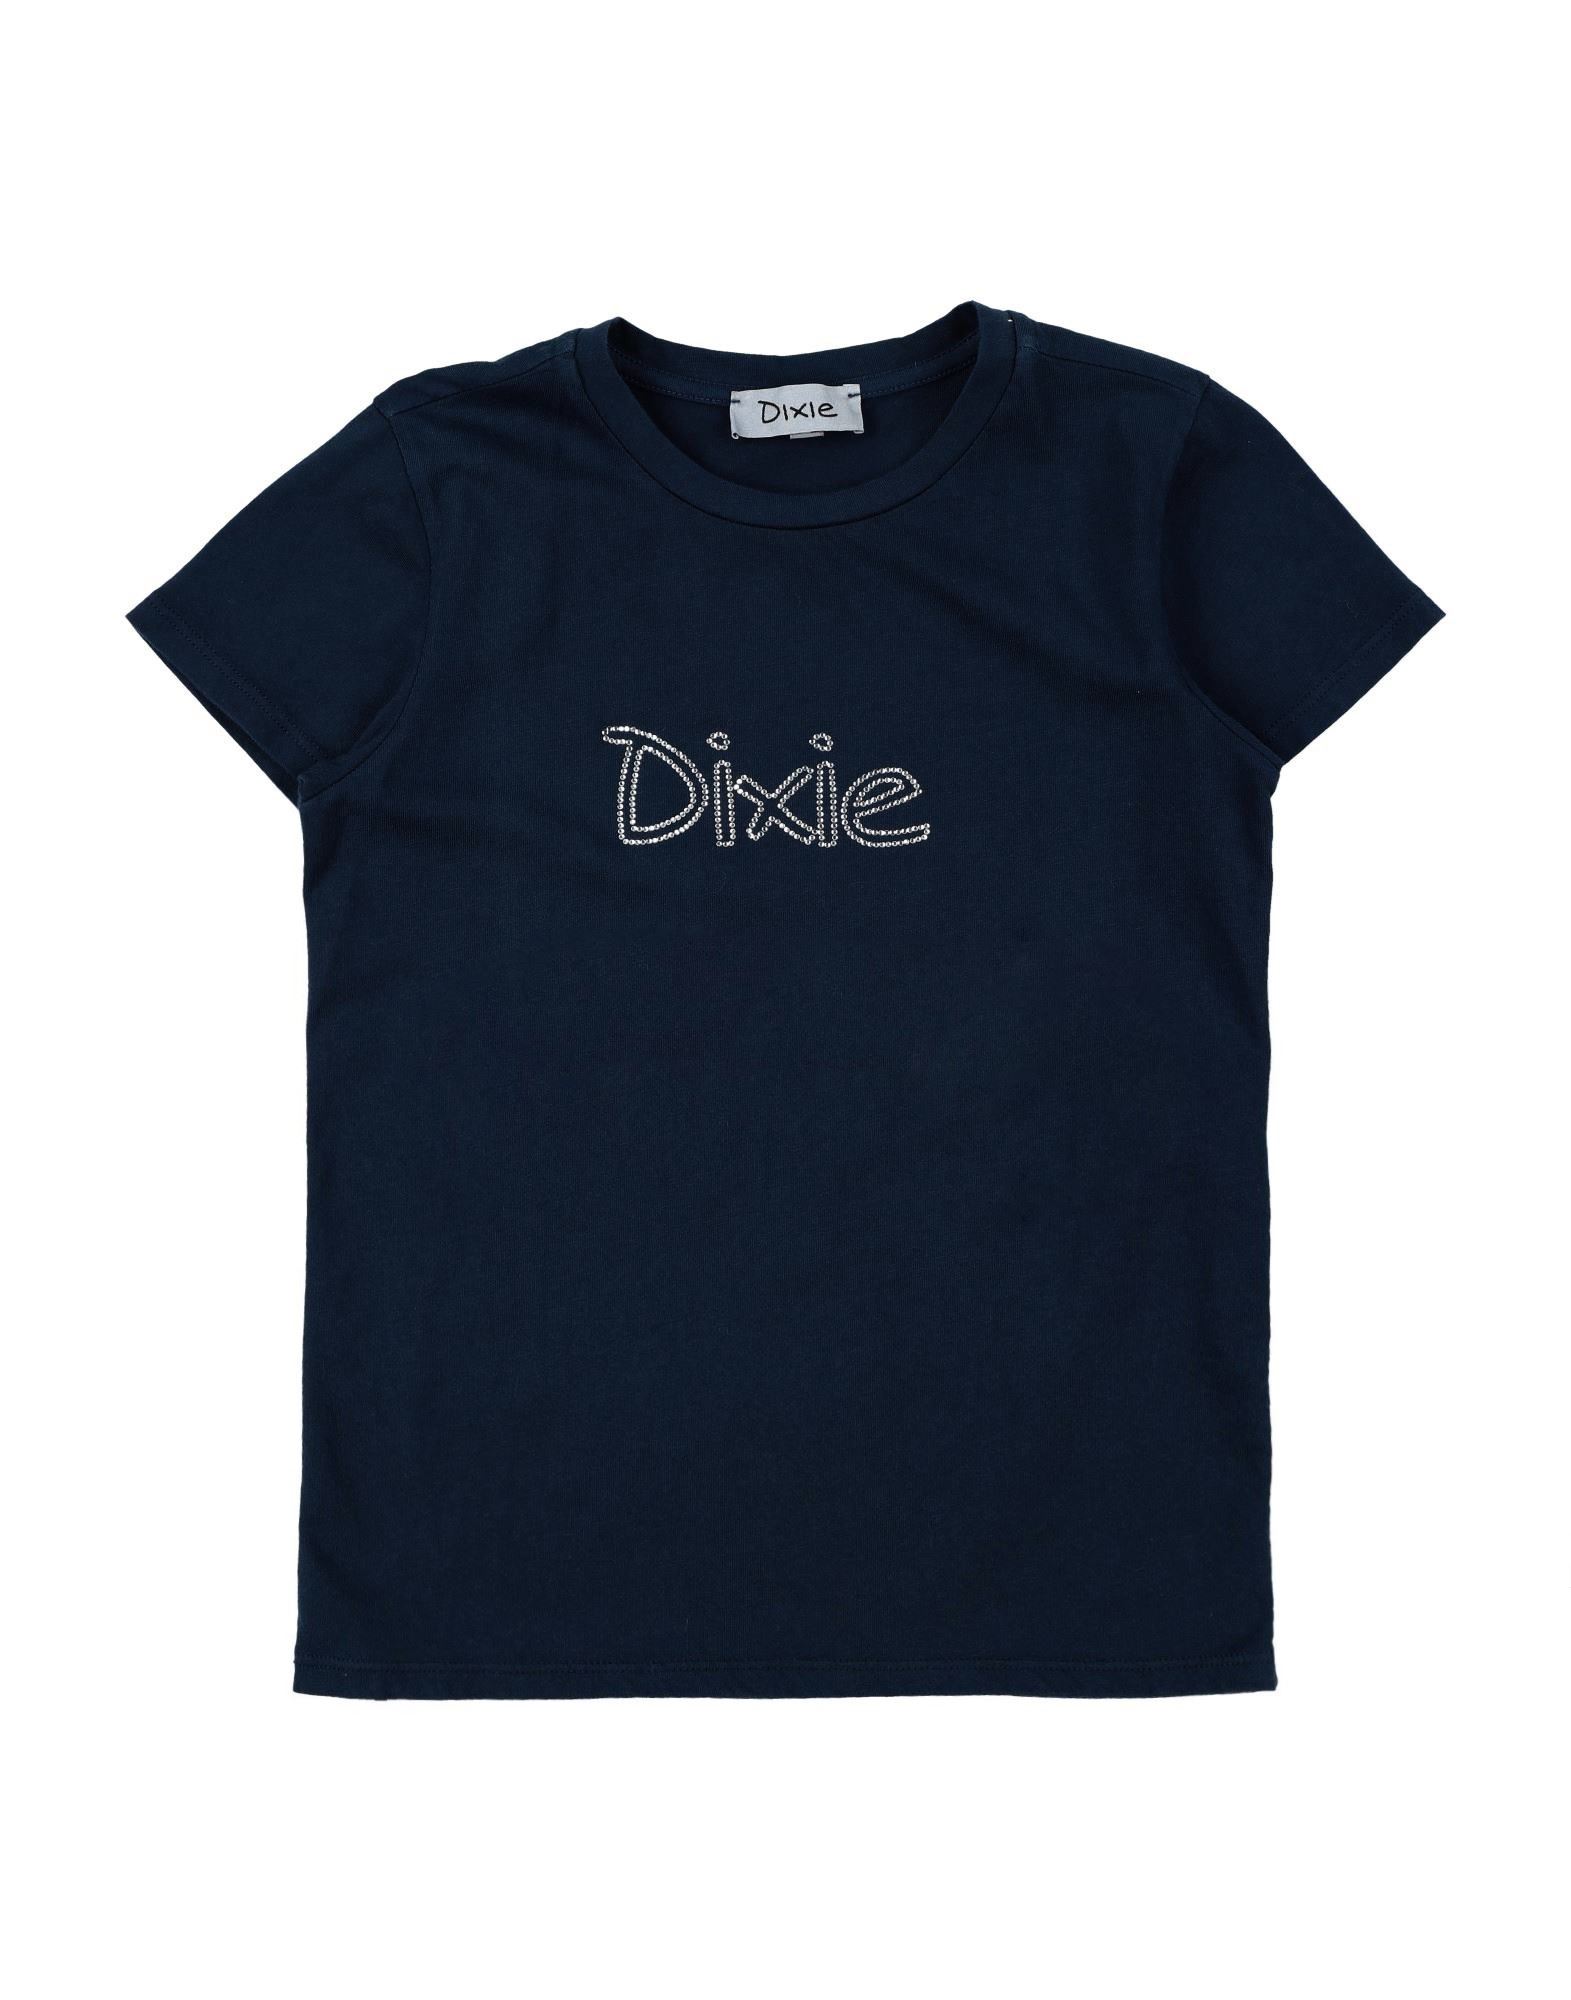 Dixie Kids' T-shirts In Midnight Blue